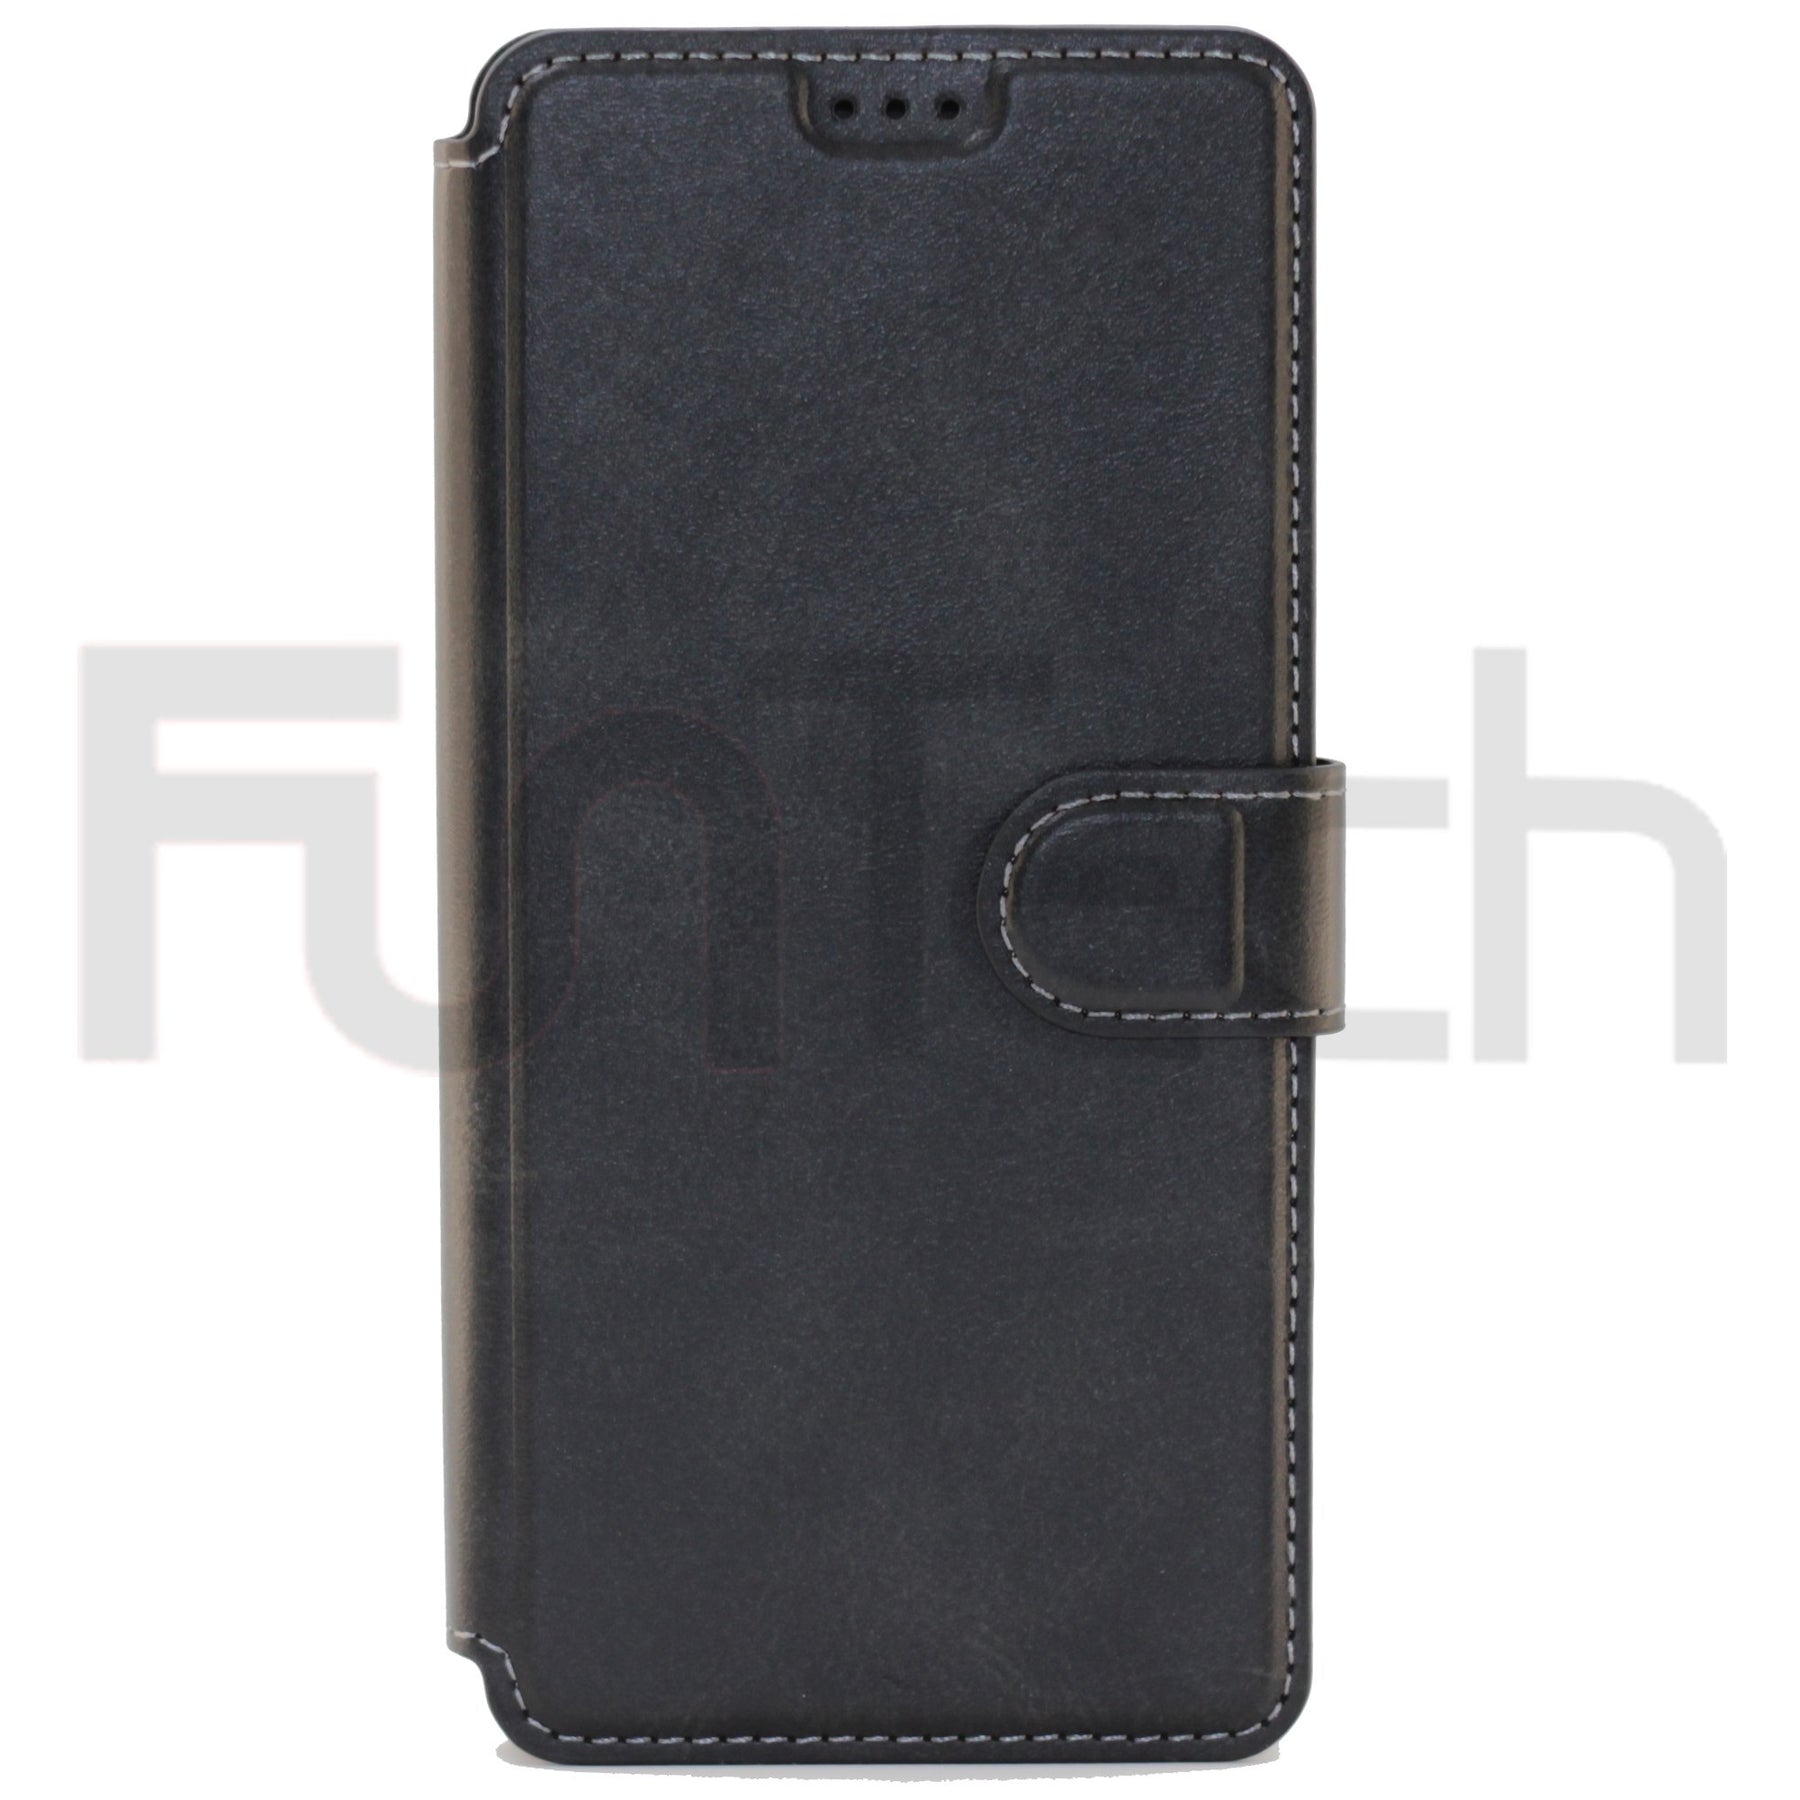 Samsung A51 Leather Wallet Case Color Black